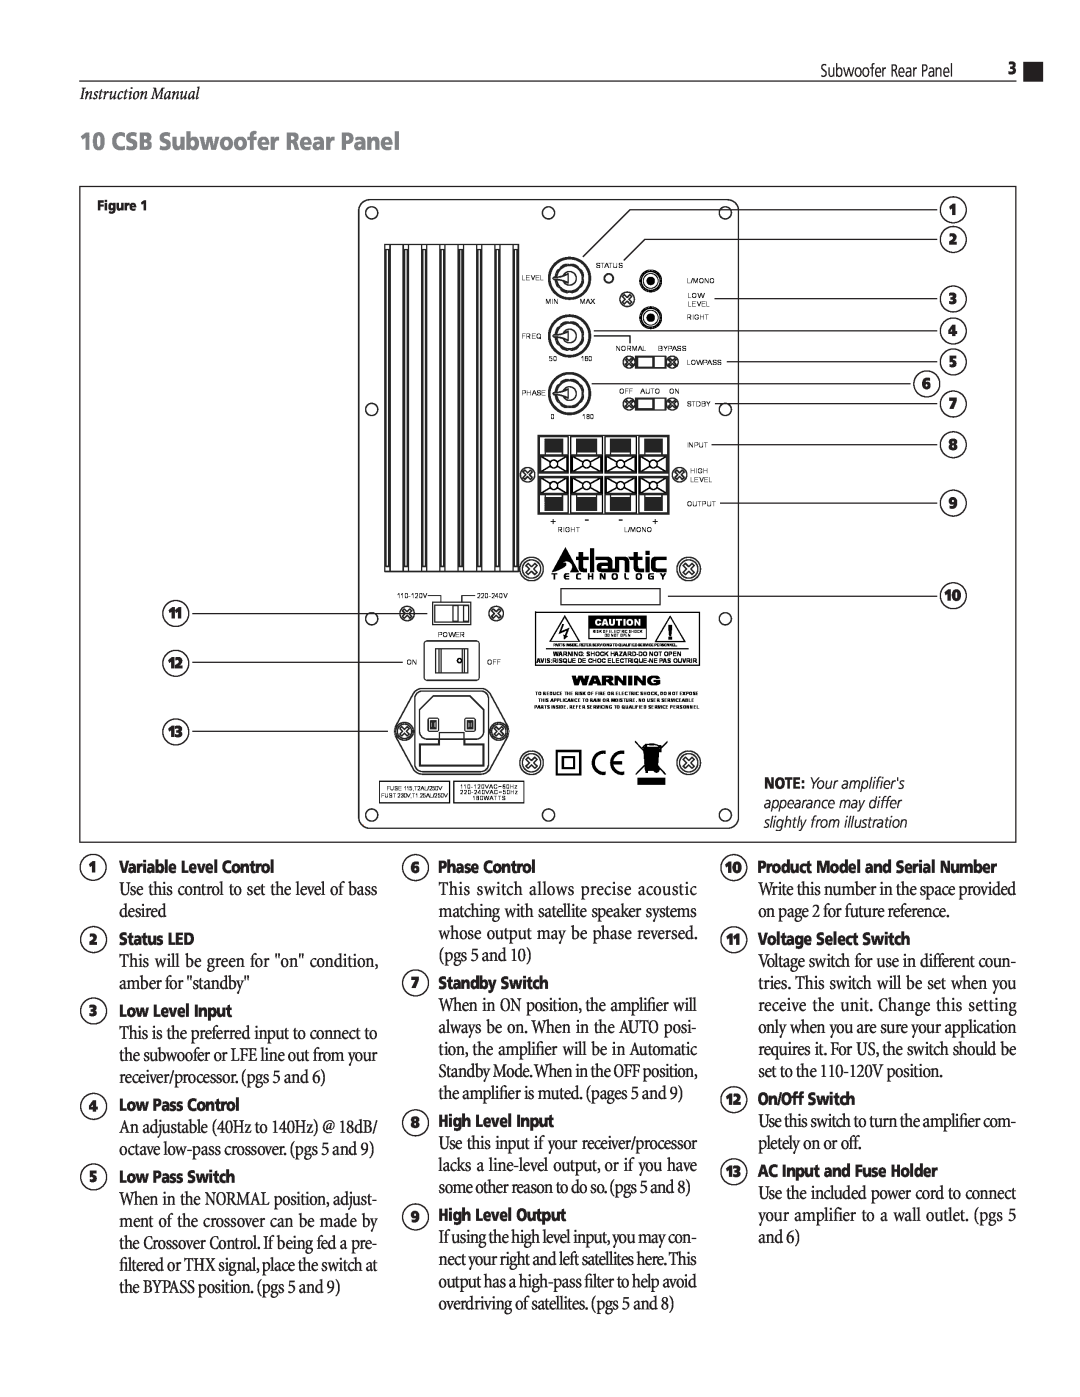 Atlantic Technology 10 CSB instruction manual CSB Subwoofer Rear Panel 